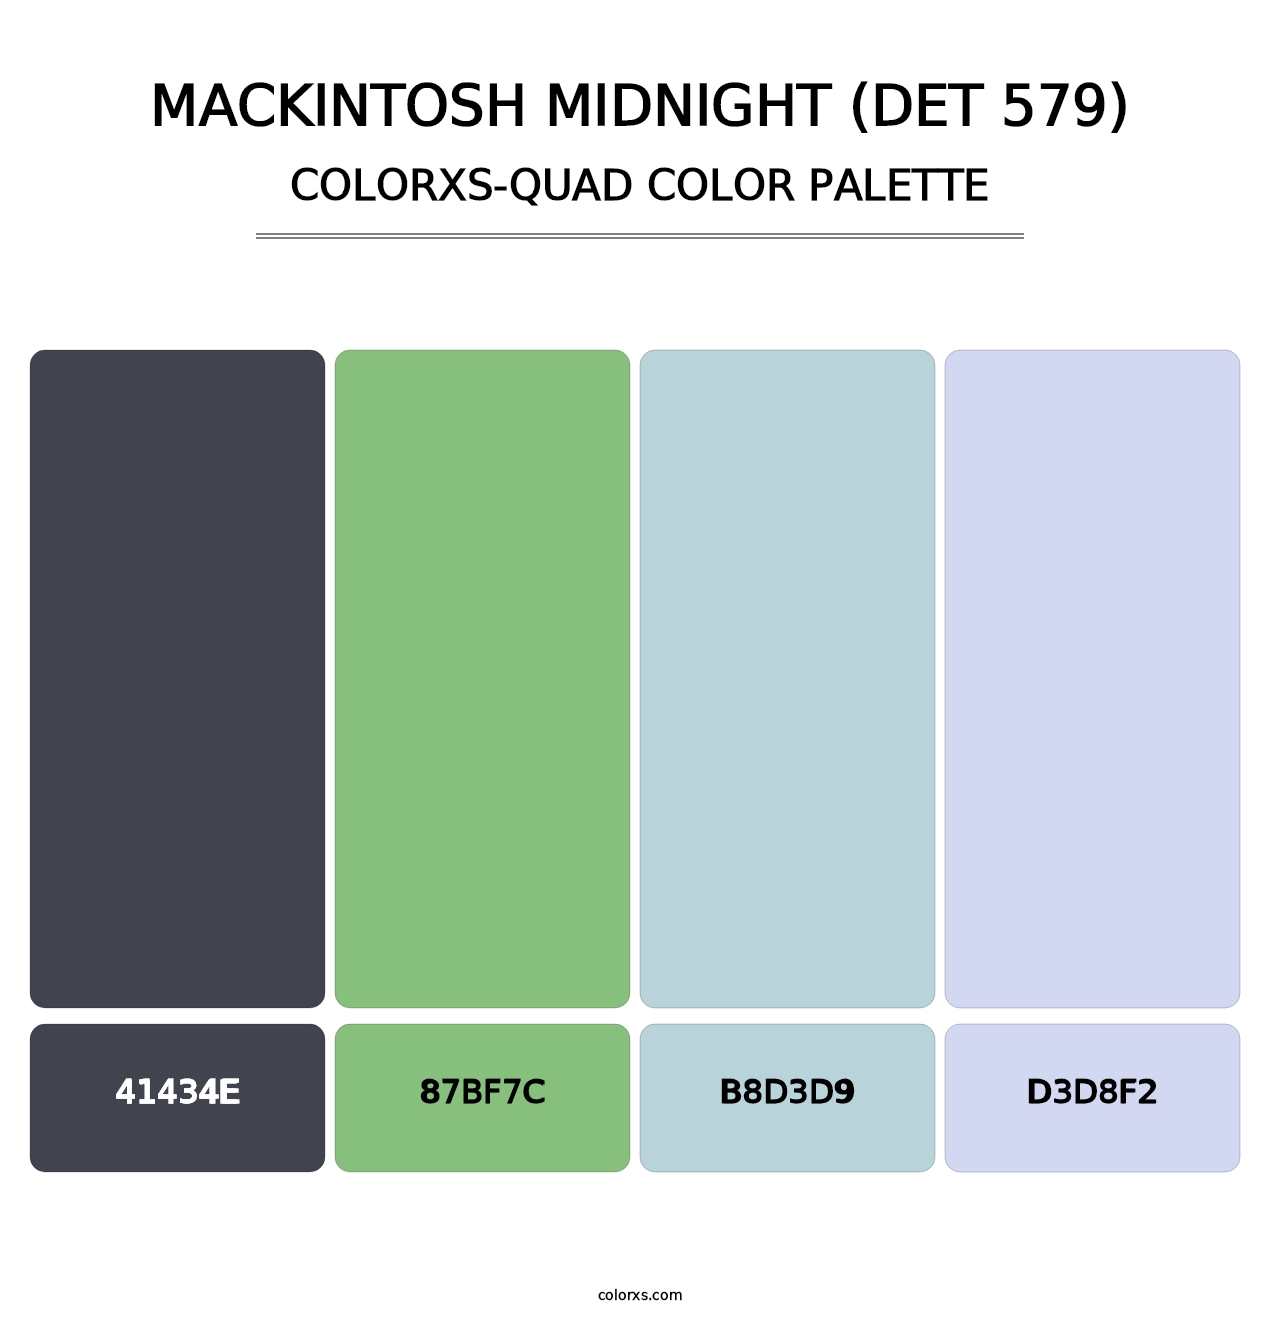 MacKintosh Midnight (DET 579) - Colorxs Quad Palette